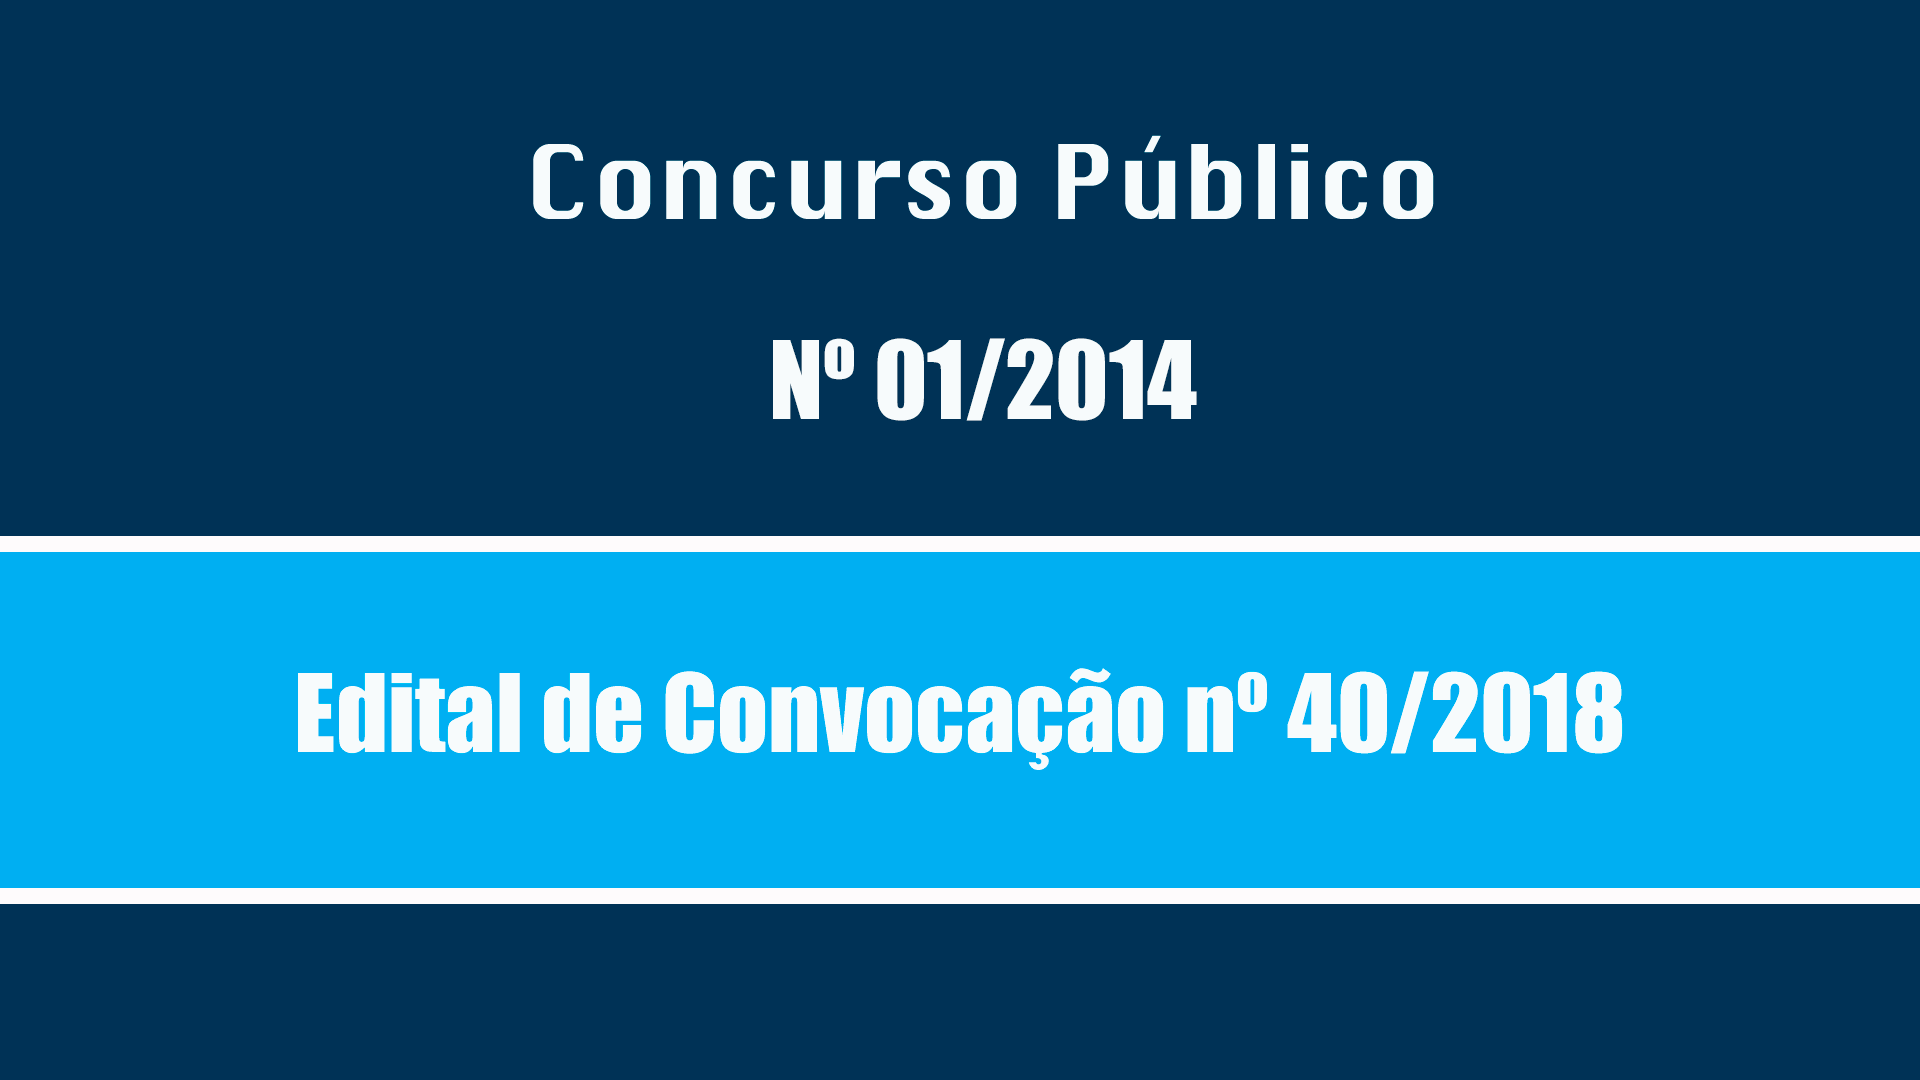 CONCURSO PÚBLICO Nº 001/2014 - EDITAL Nº 040/2018